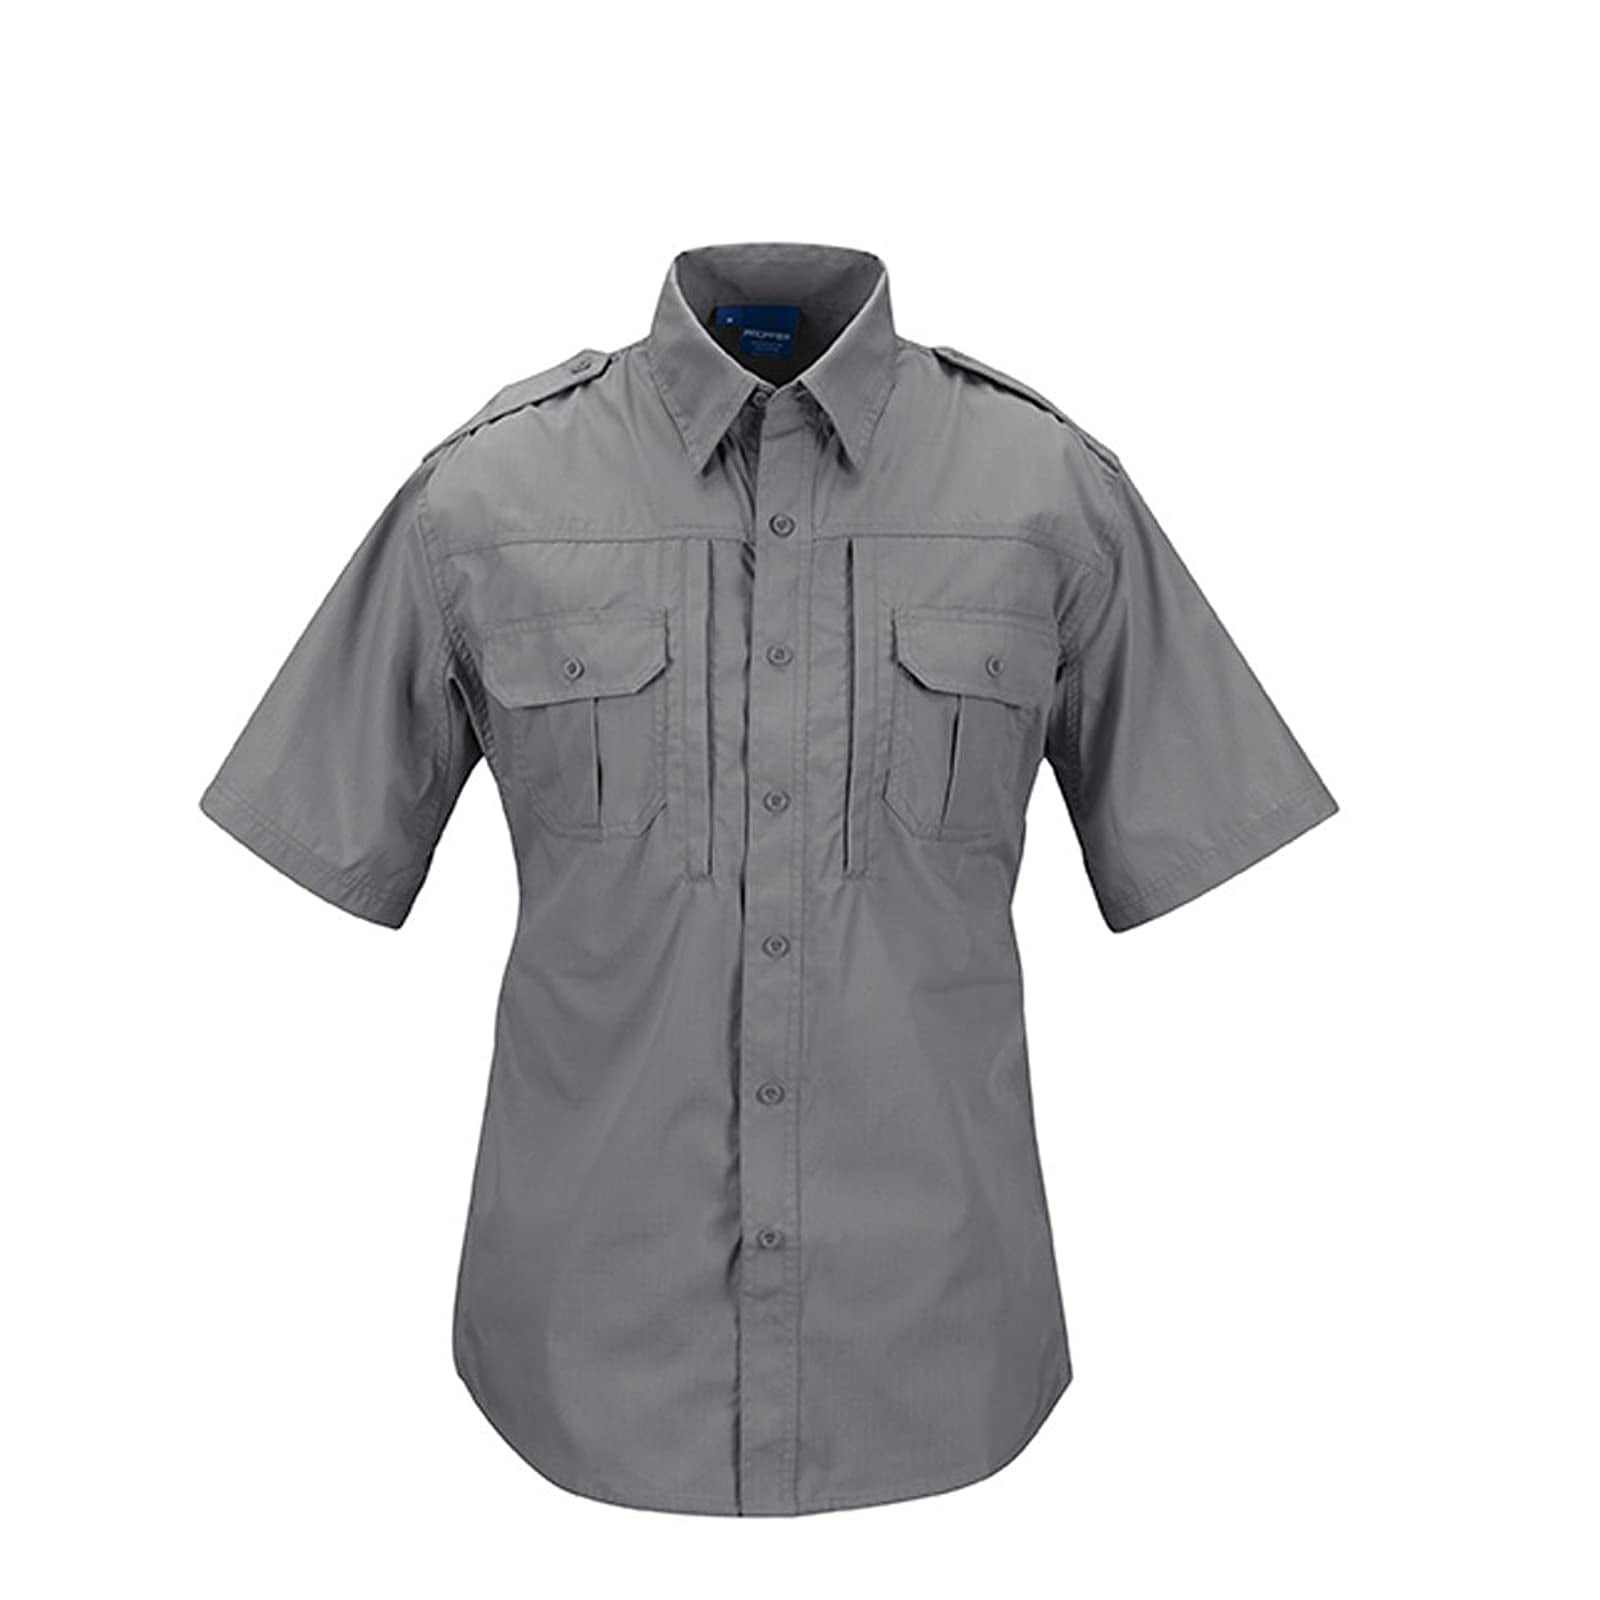 Propper Mens Short Sleeve Tactical Shirt Charcoal Grey Large Regular